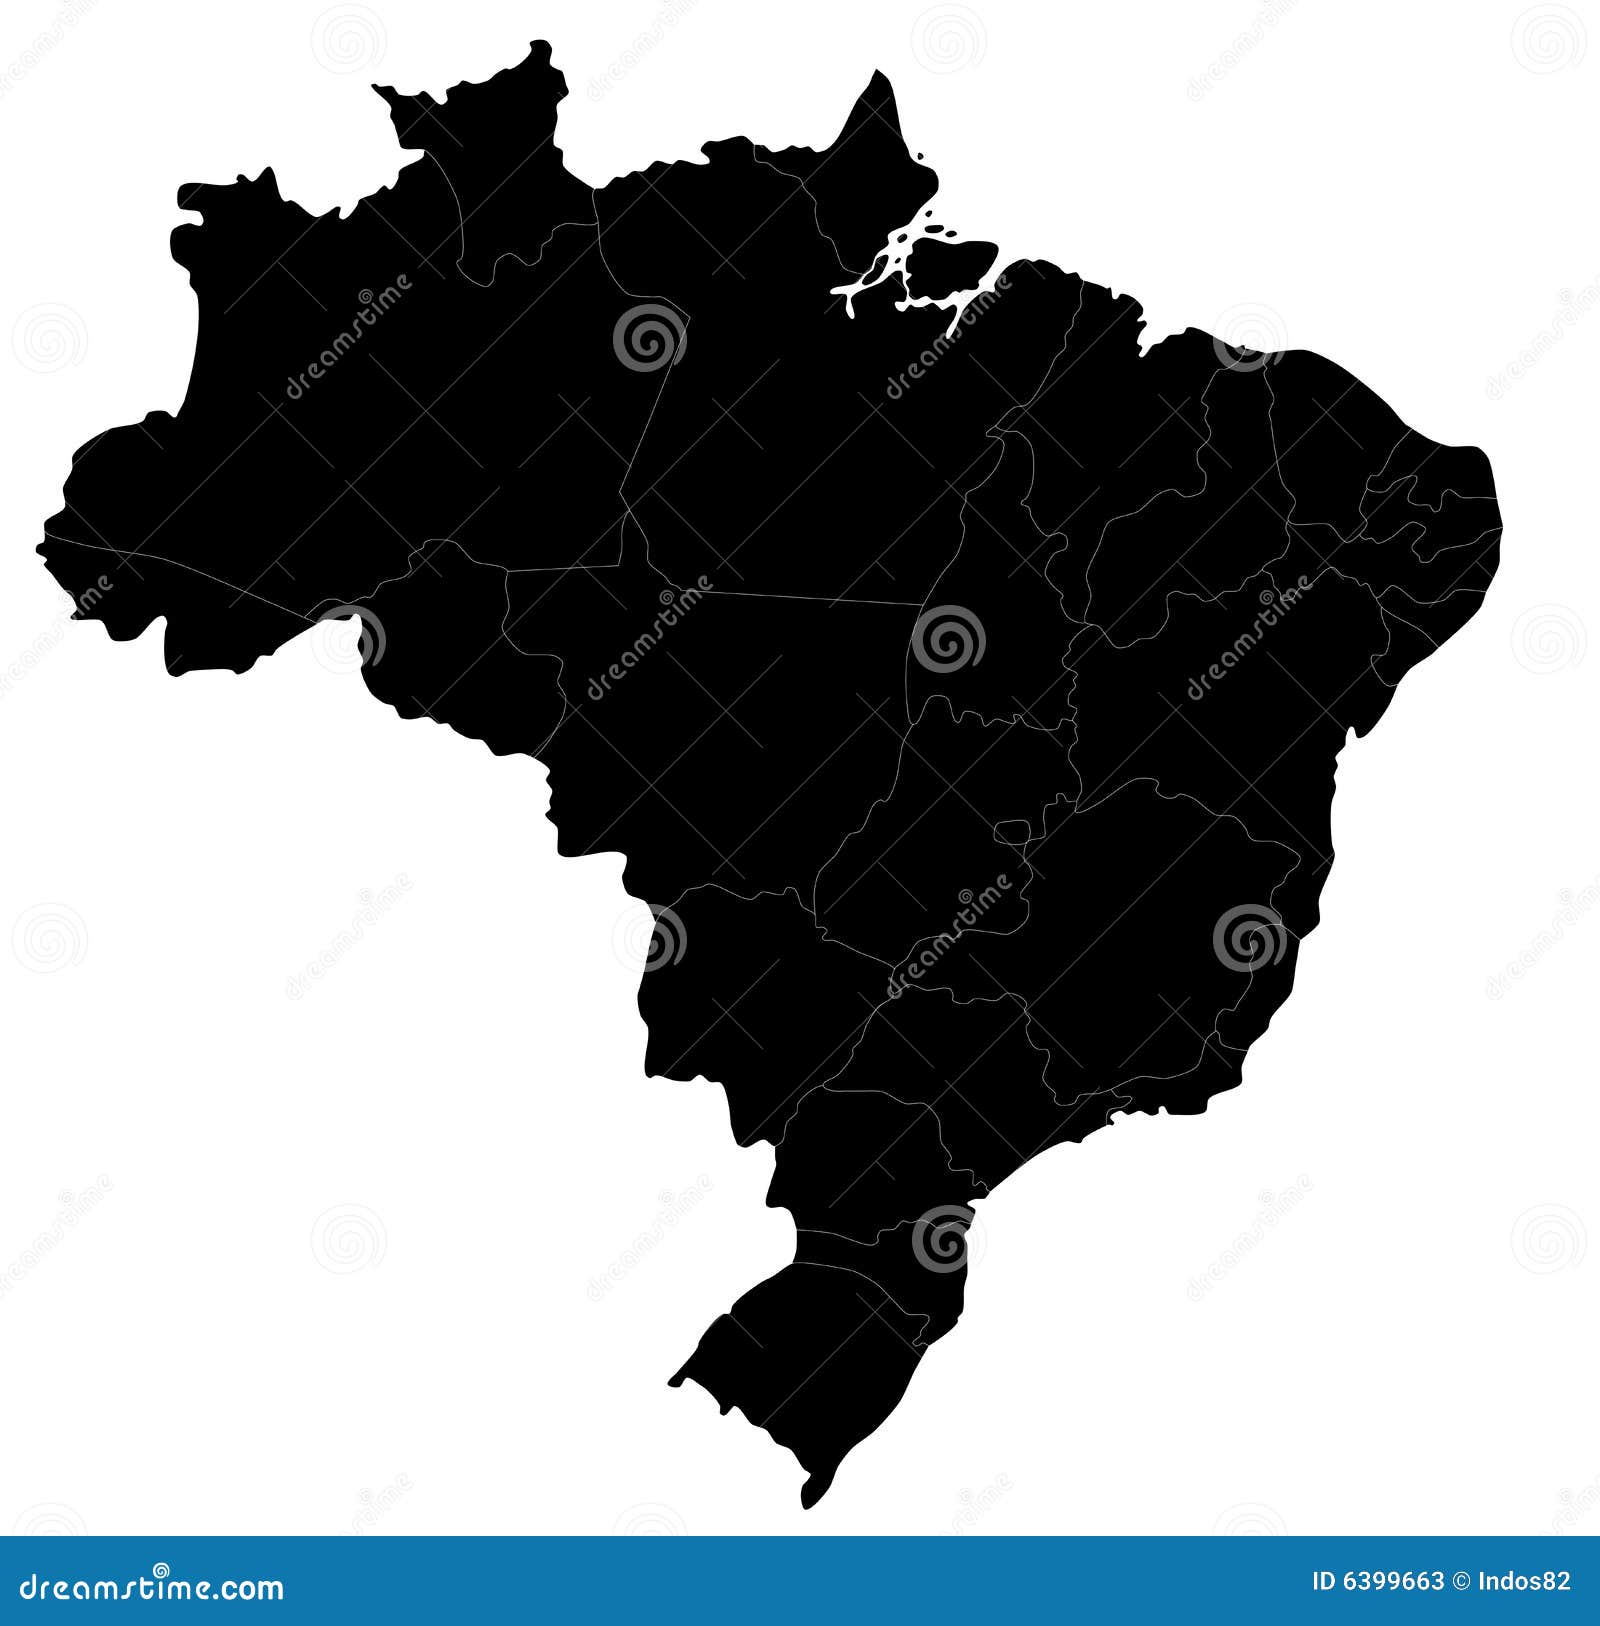  brazil map